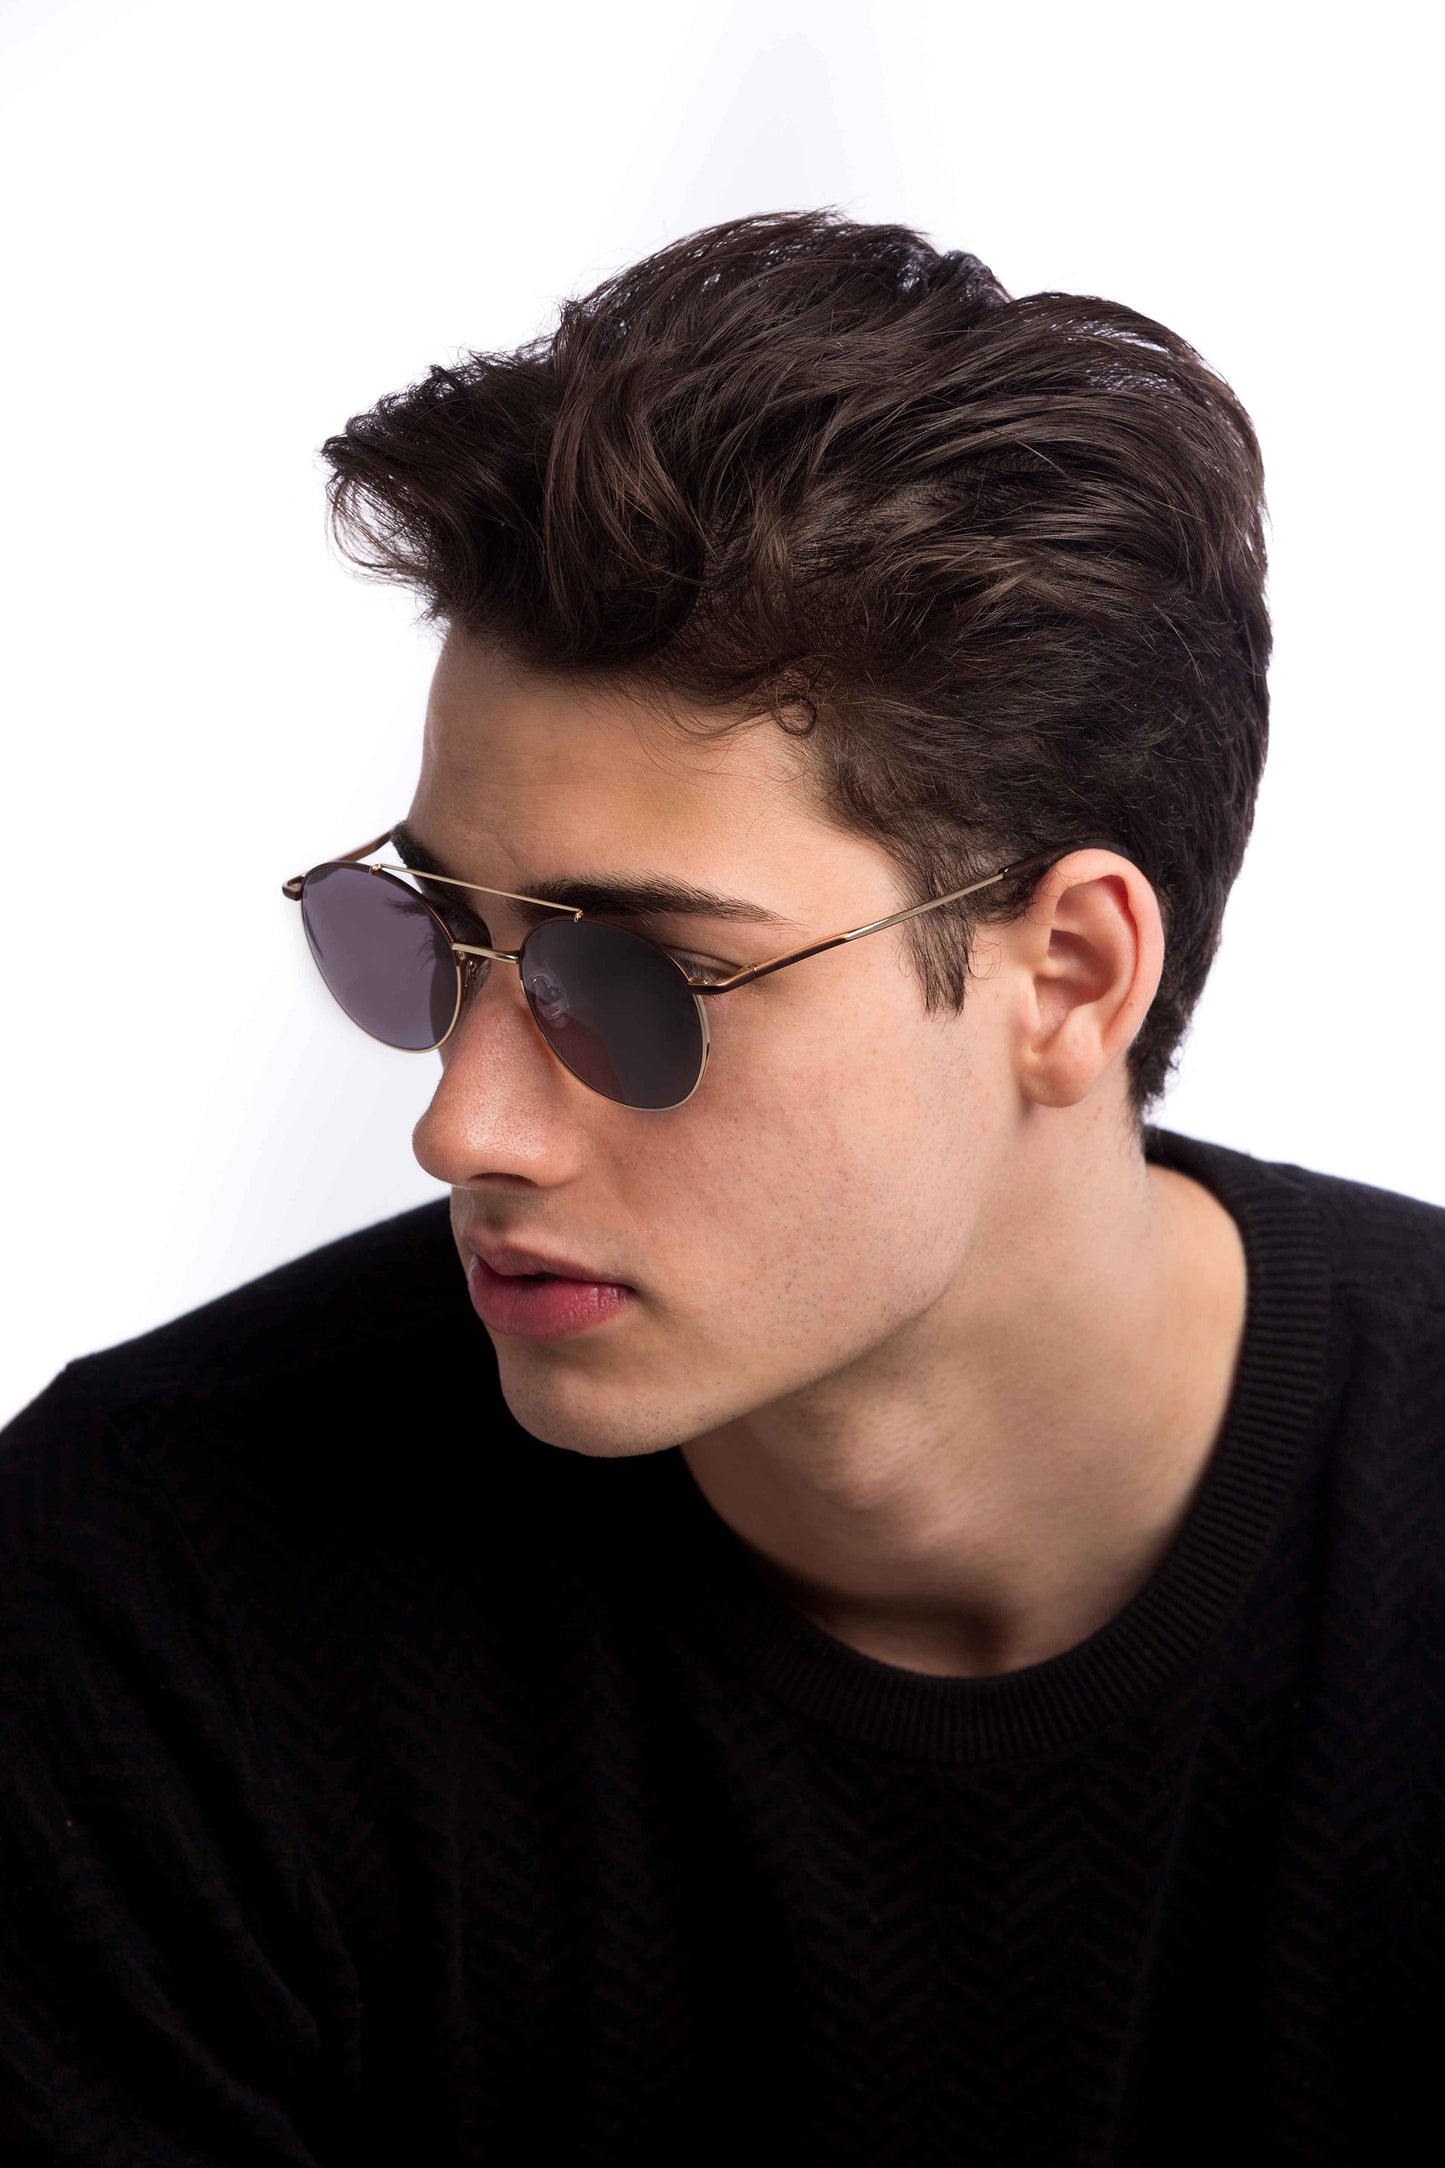 Chester Sunglasses (Grey)